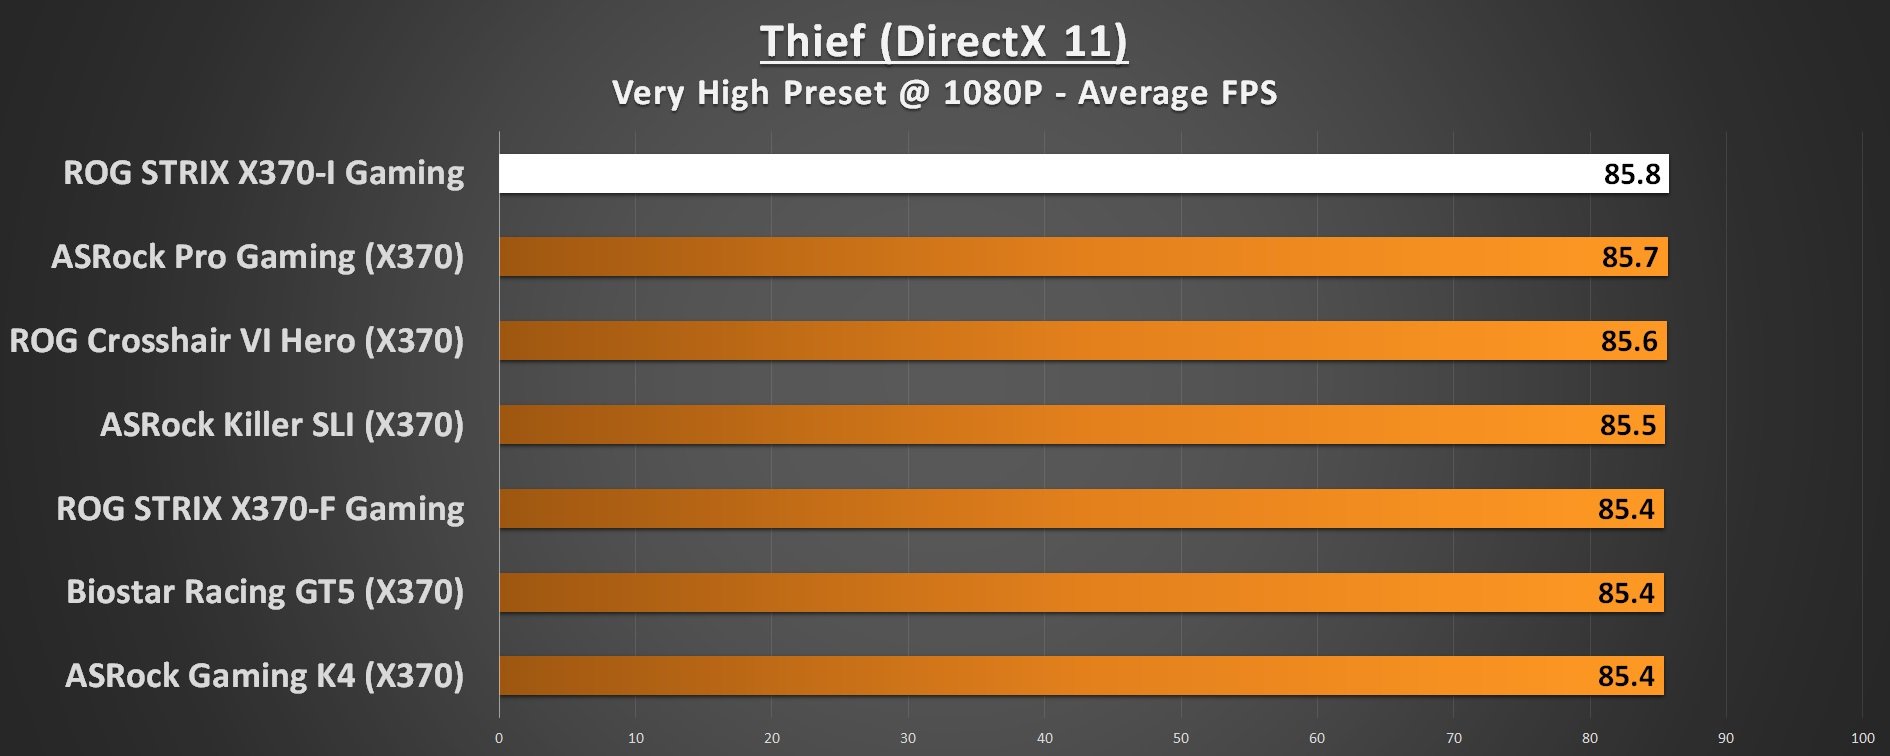 ASUS ROG STRIX X370-I Performance Thief 1080p DirectX 11